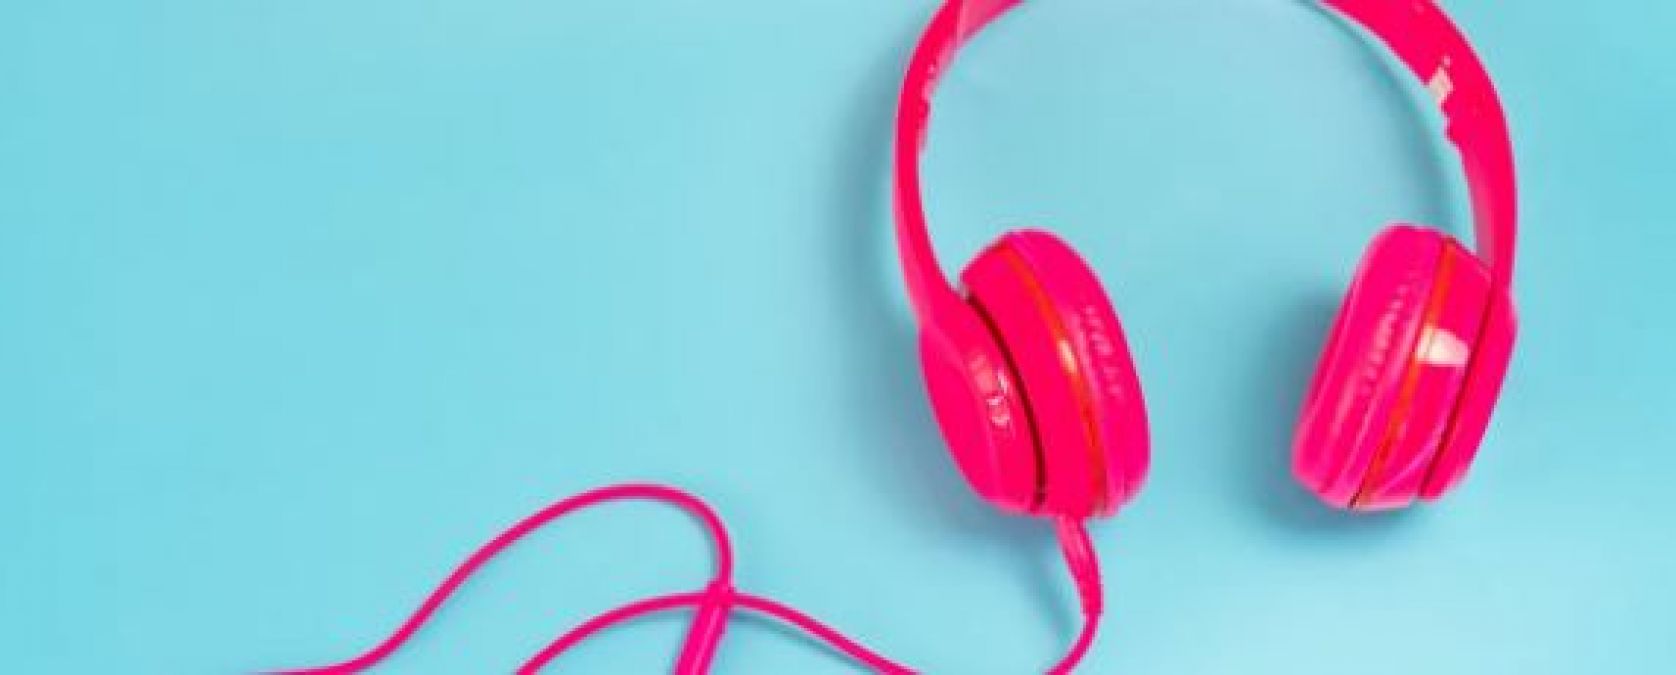 Listening to music has shocking health benefits, must read